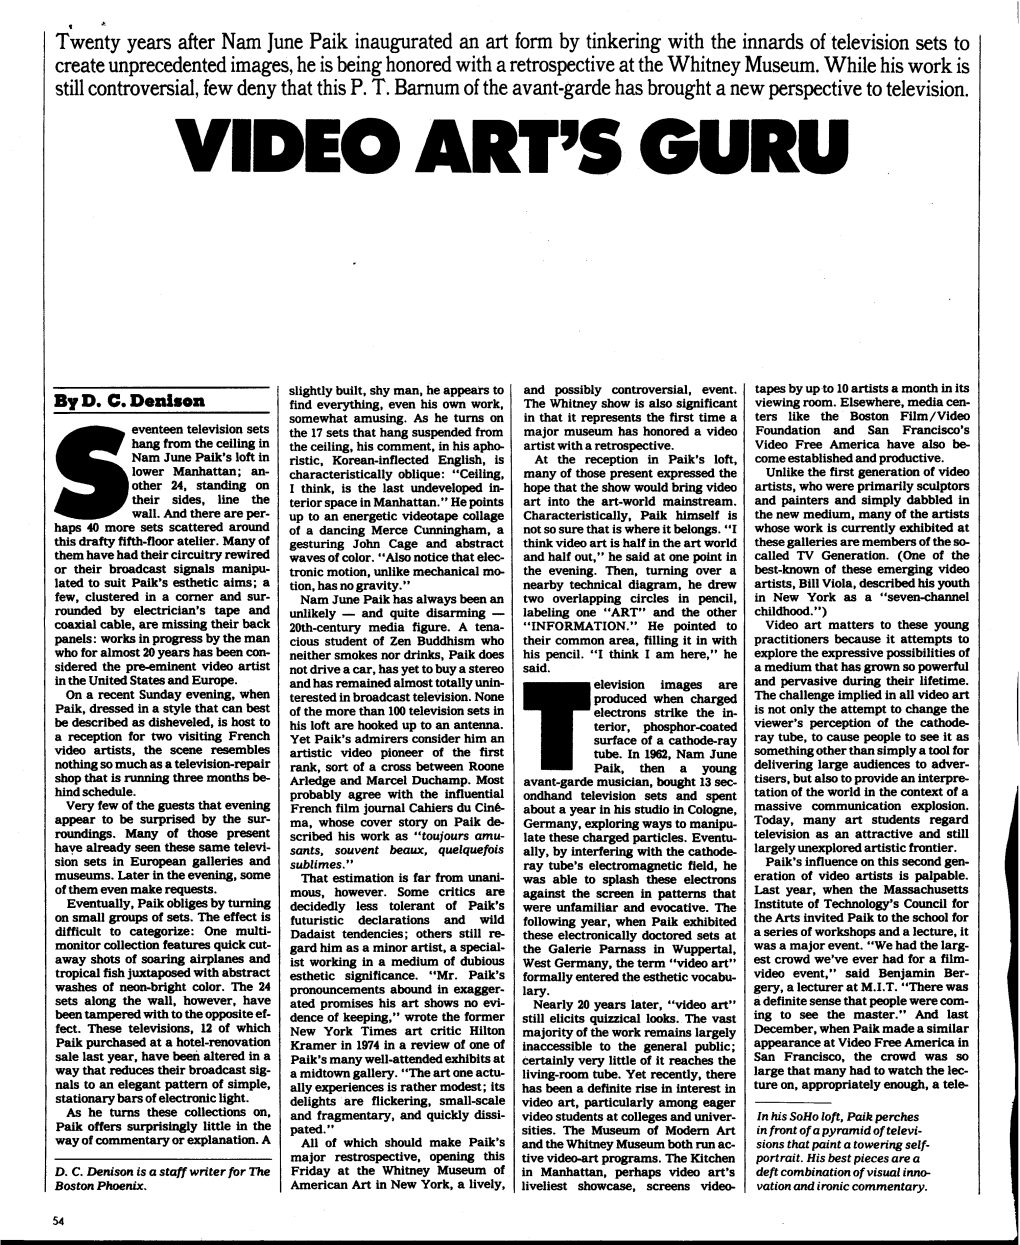 Video Art's Guru